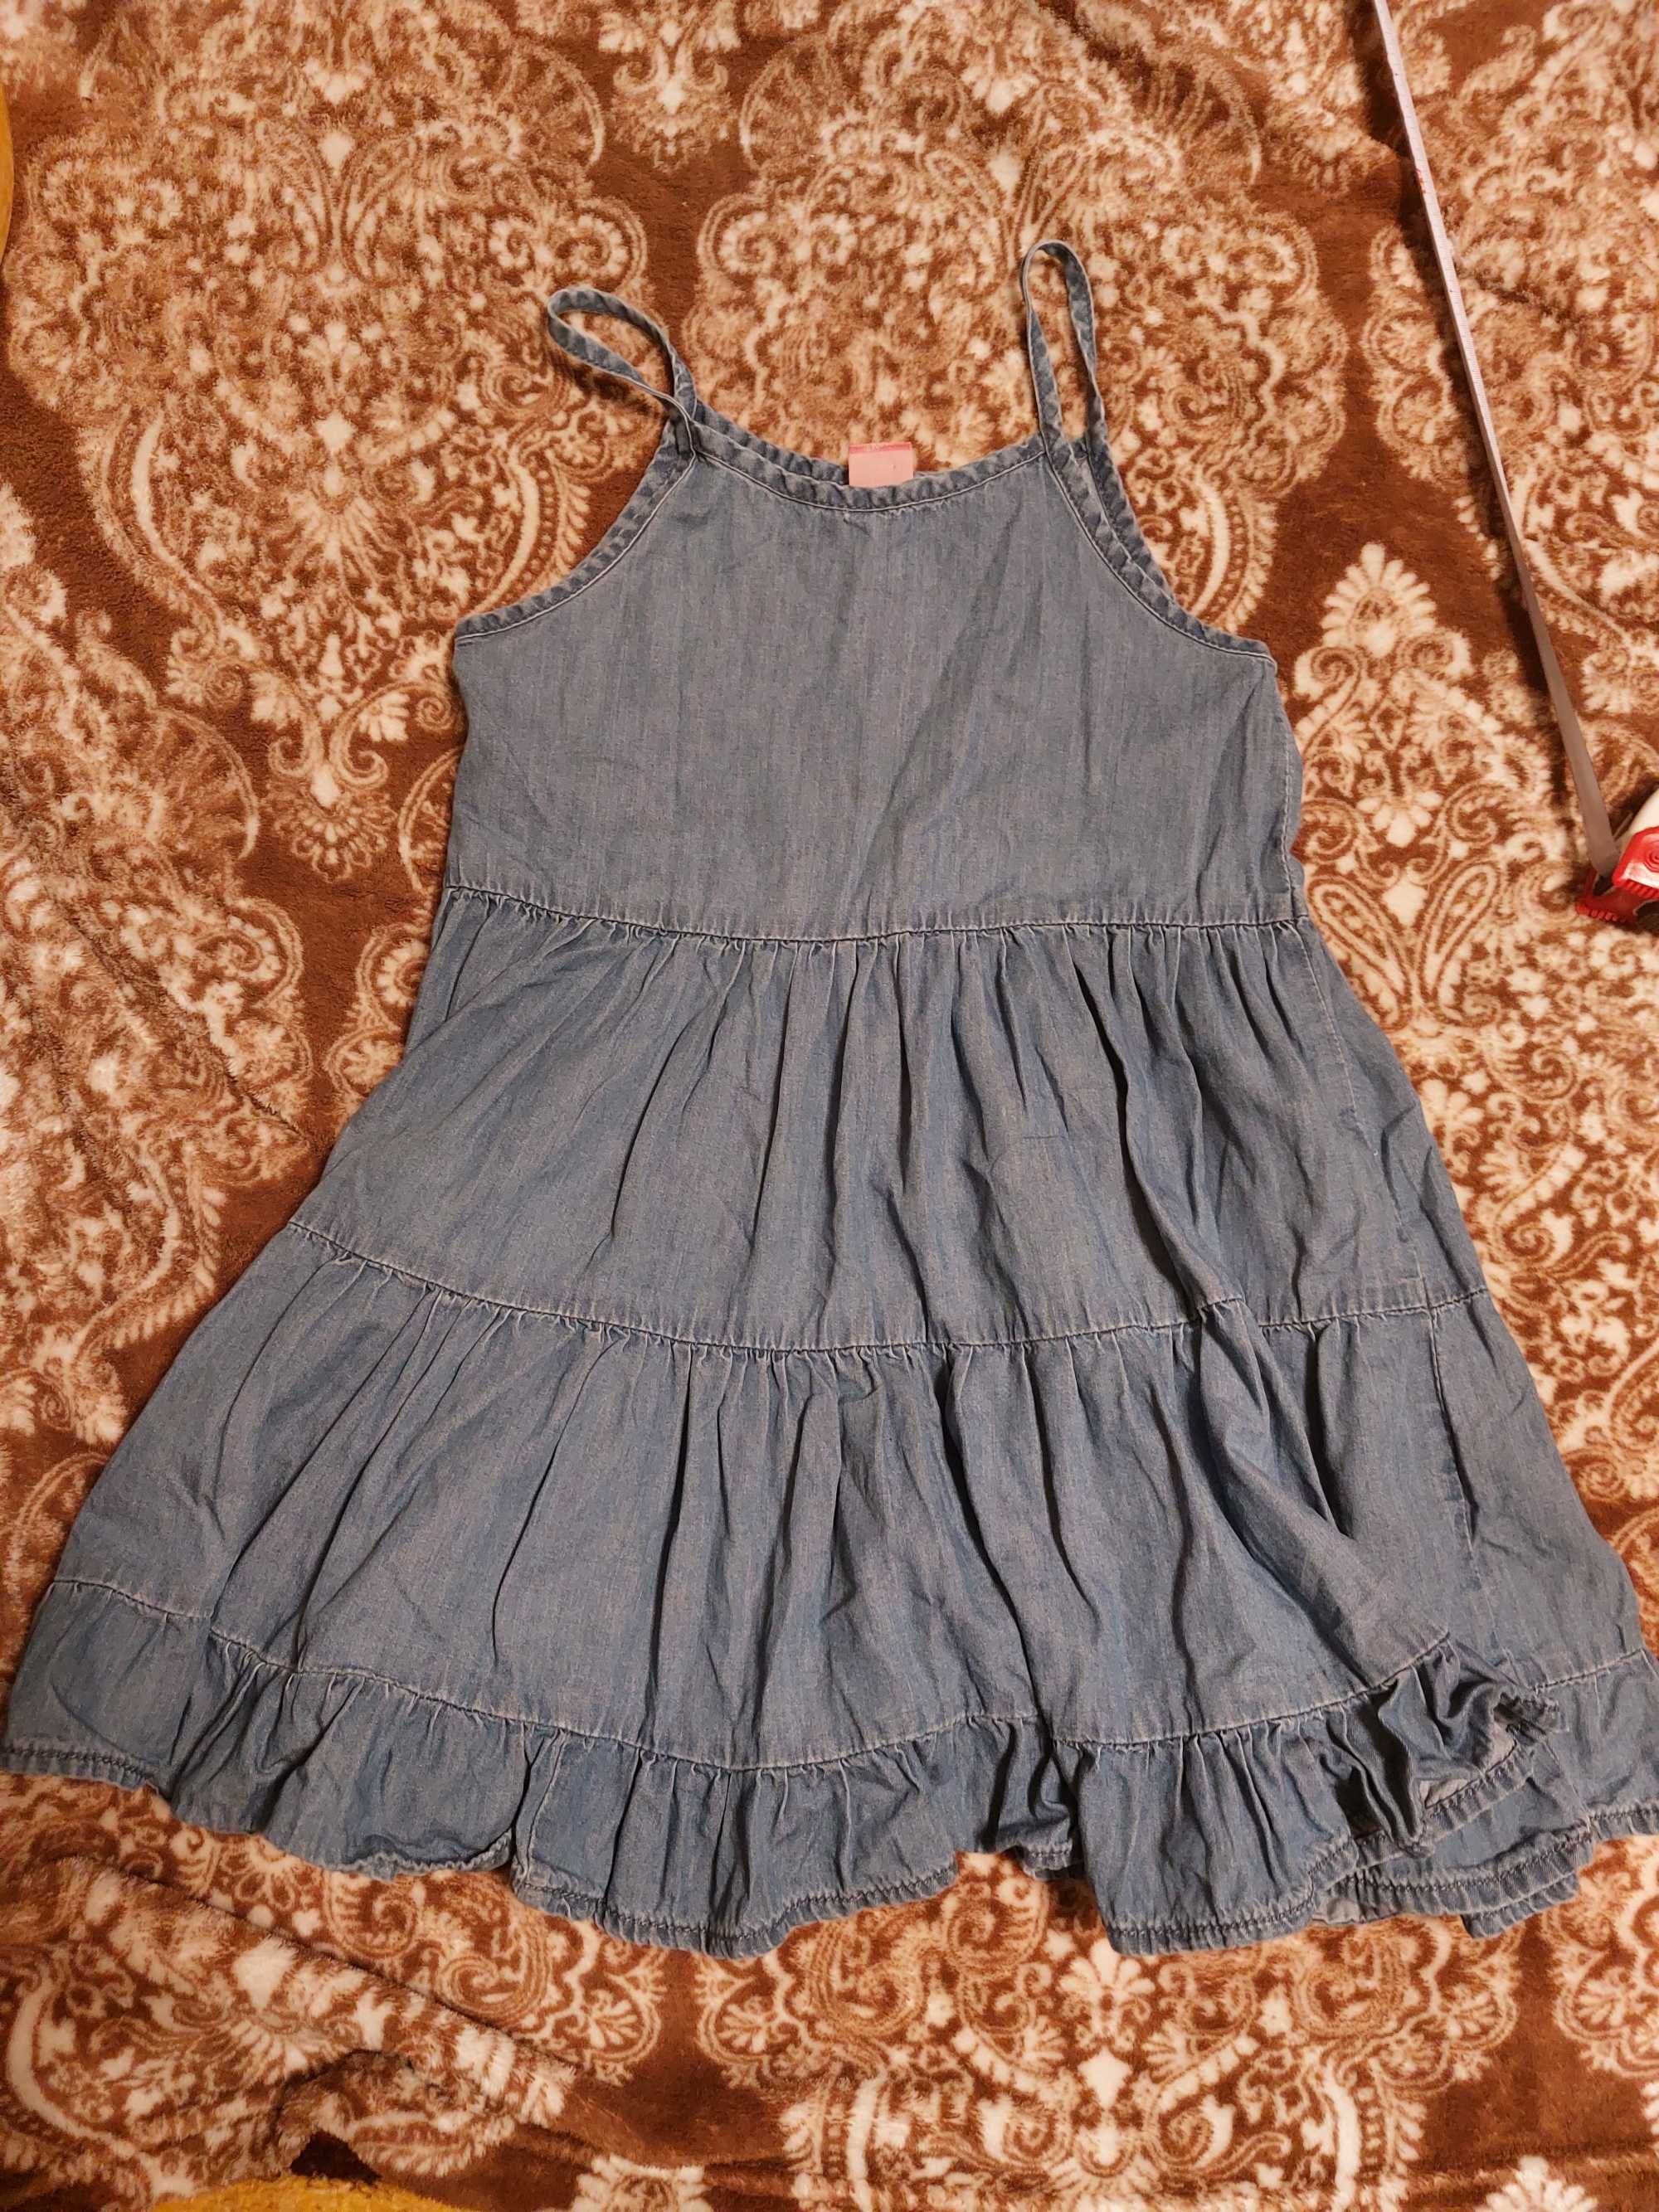 Сукня джинсова літня сарафанчик для дівчинки (платье джынсовое)